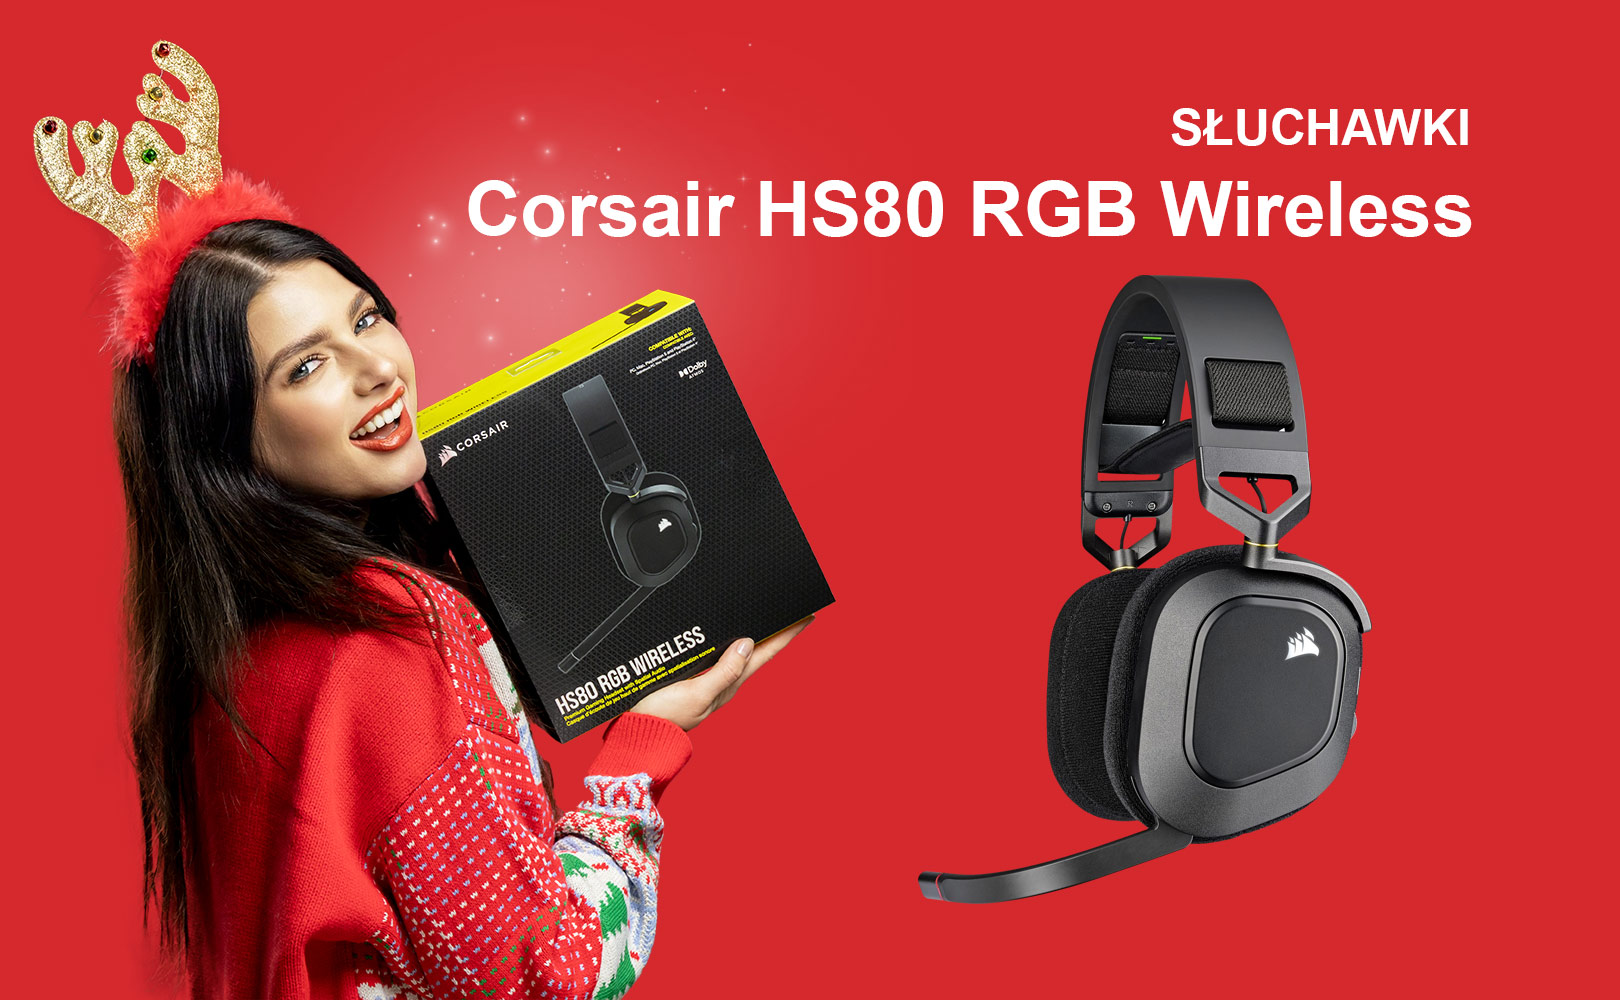 Konkurs - słuchawki Corsair HS80 RGB Wireless